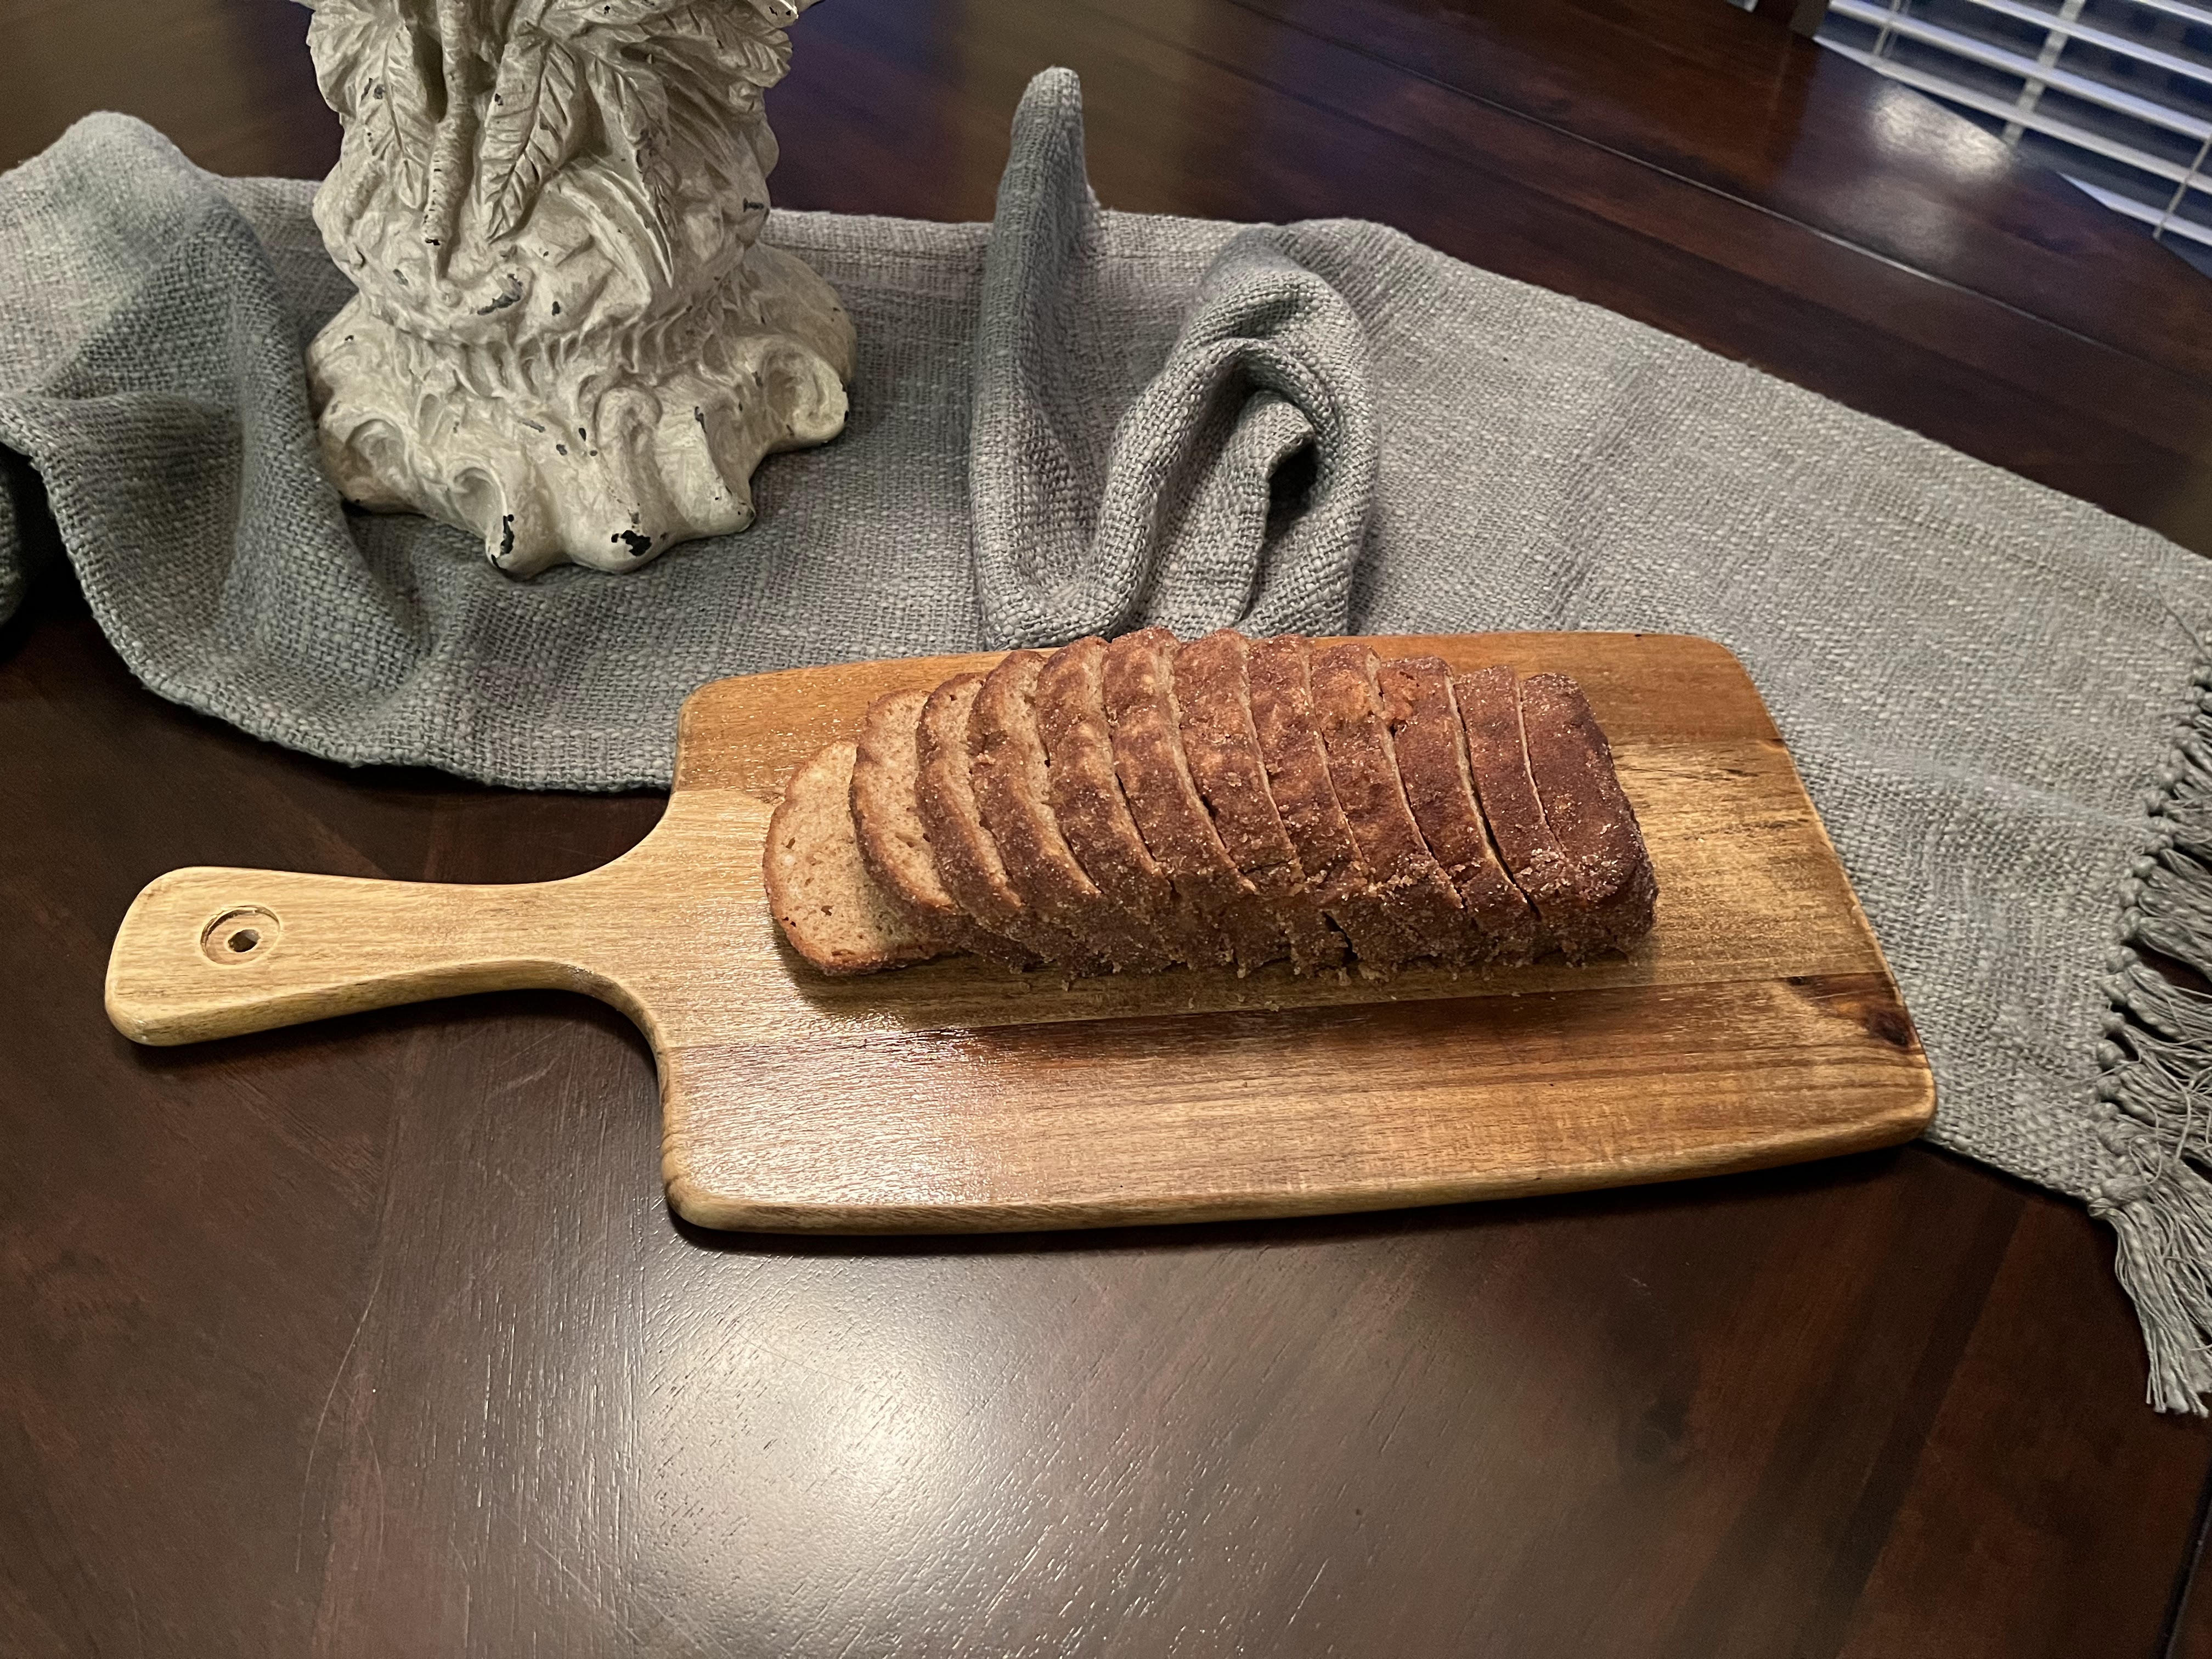 Restored cutting board with bread